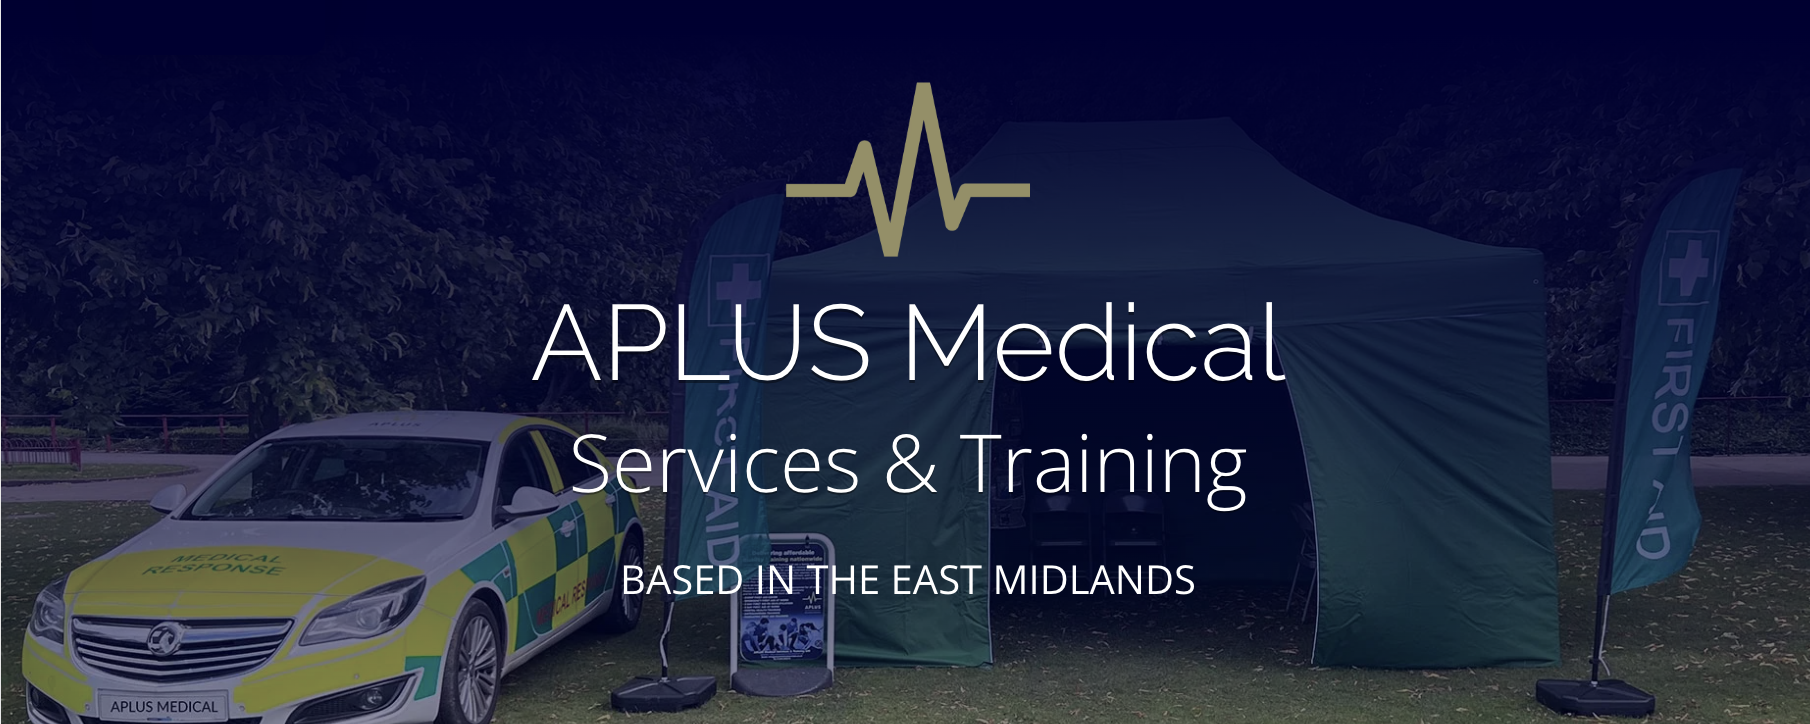 Aplus Medical Services & Training